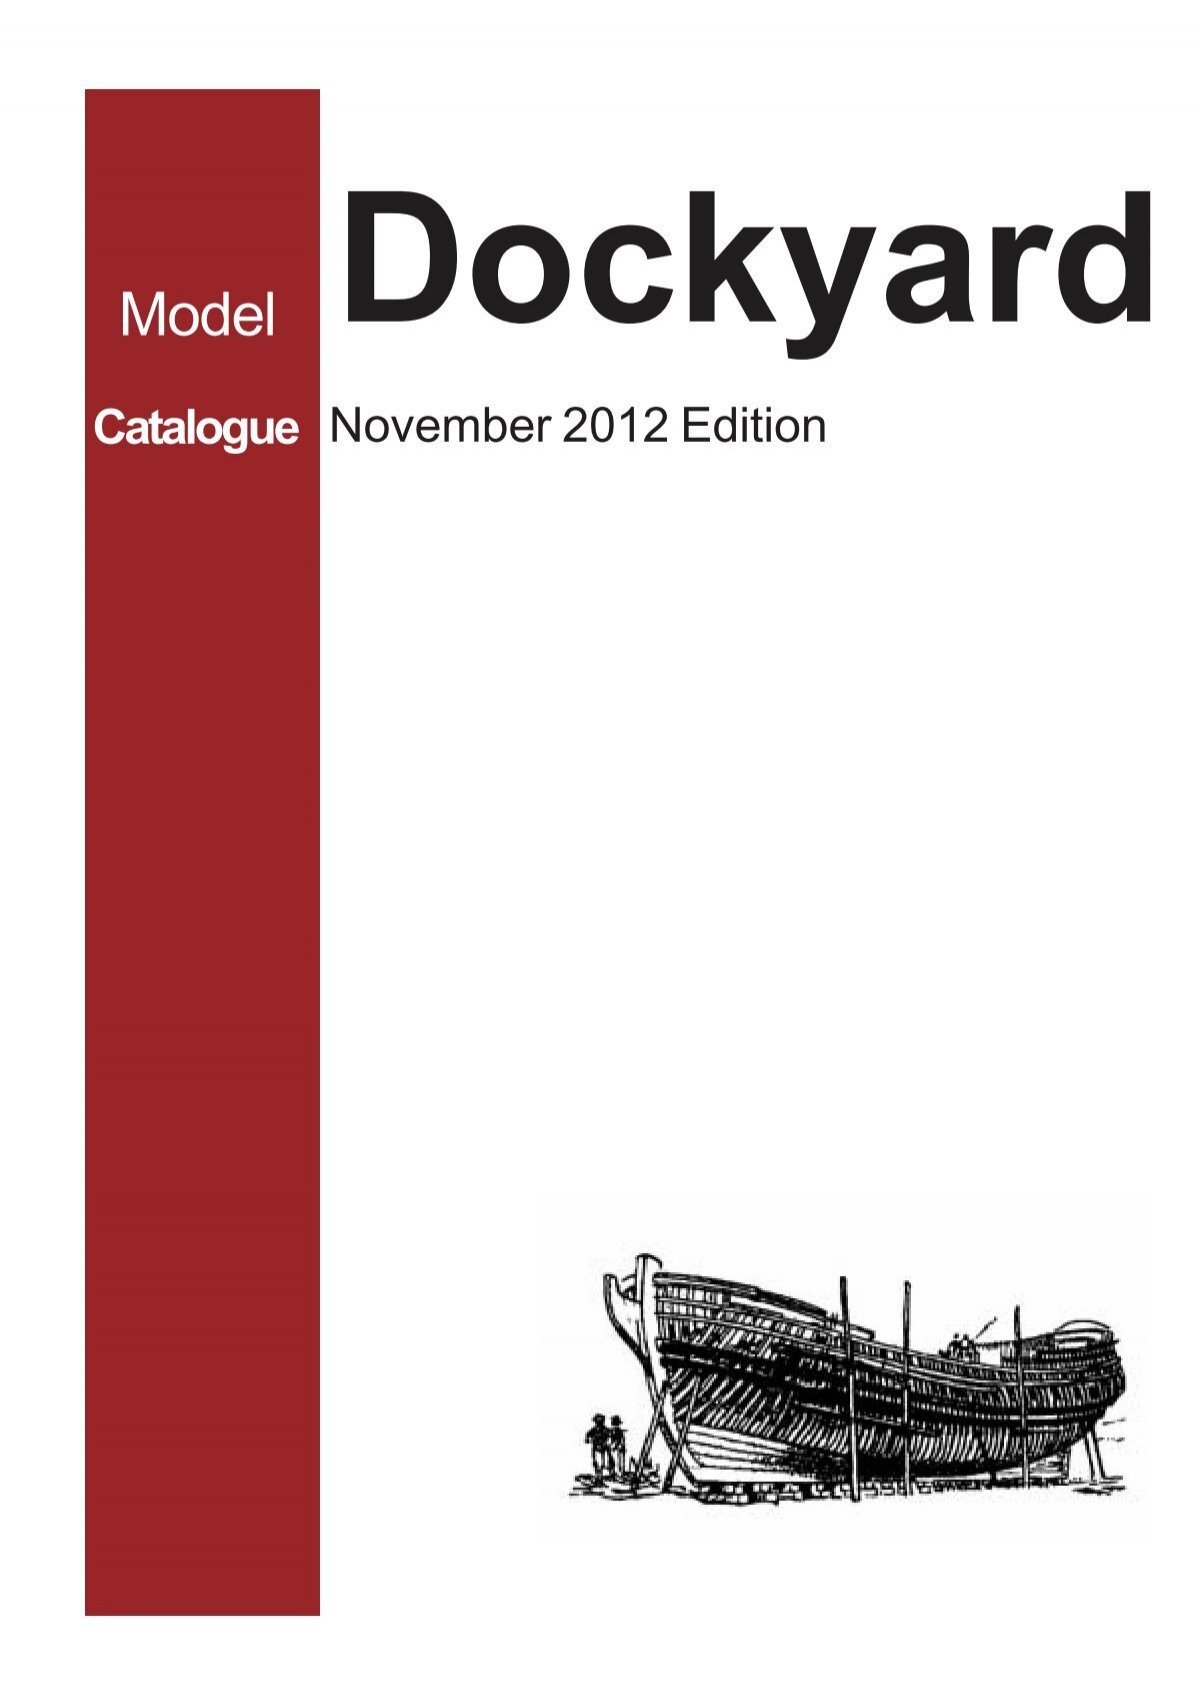 TMD Catalogue - the Model Dockyard